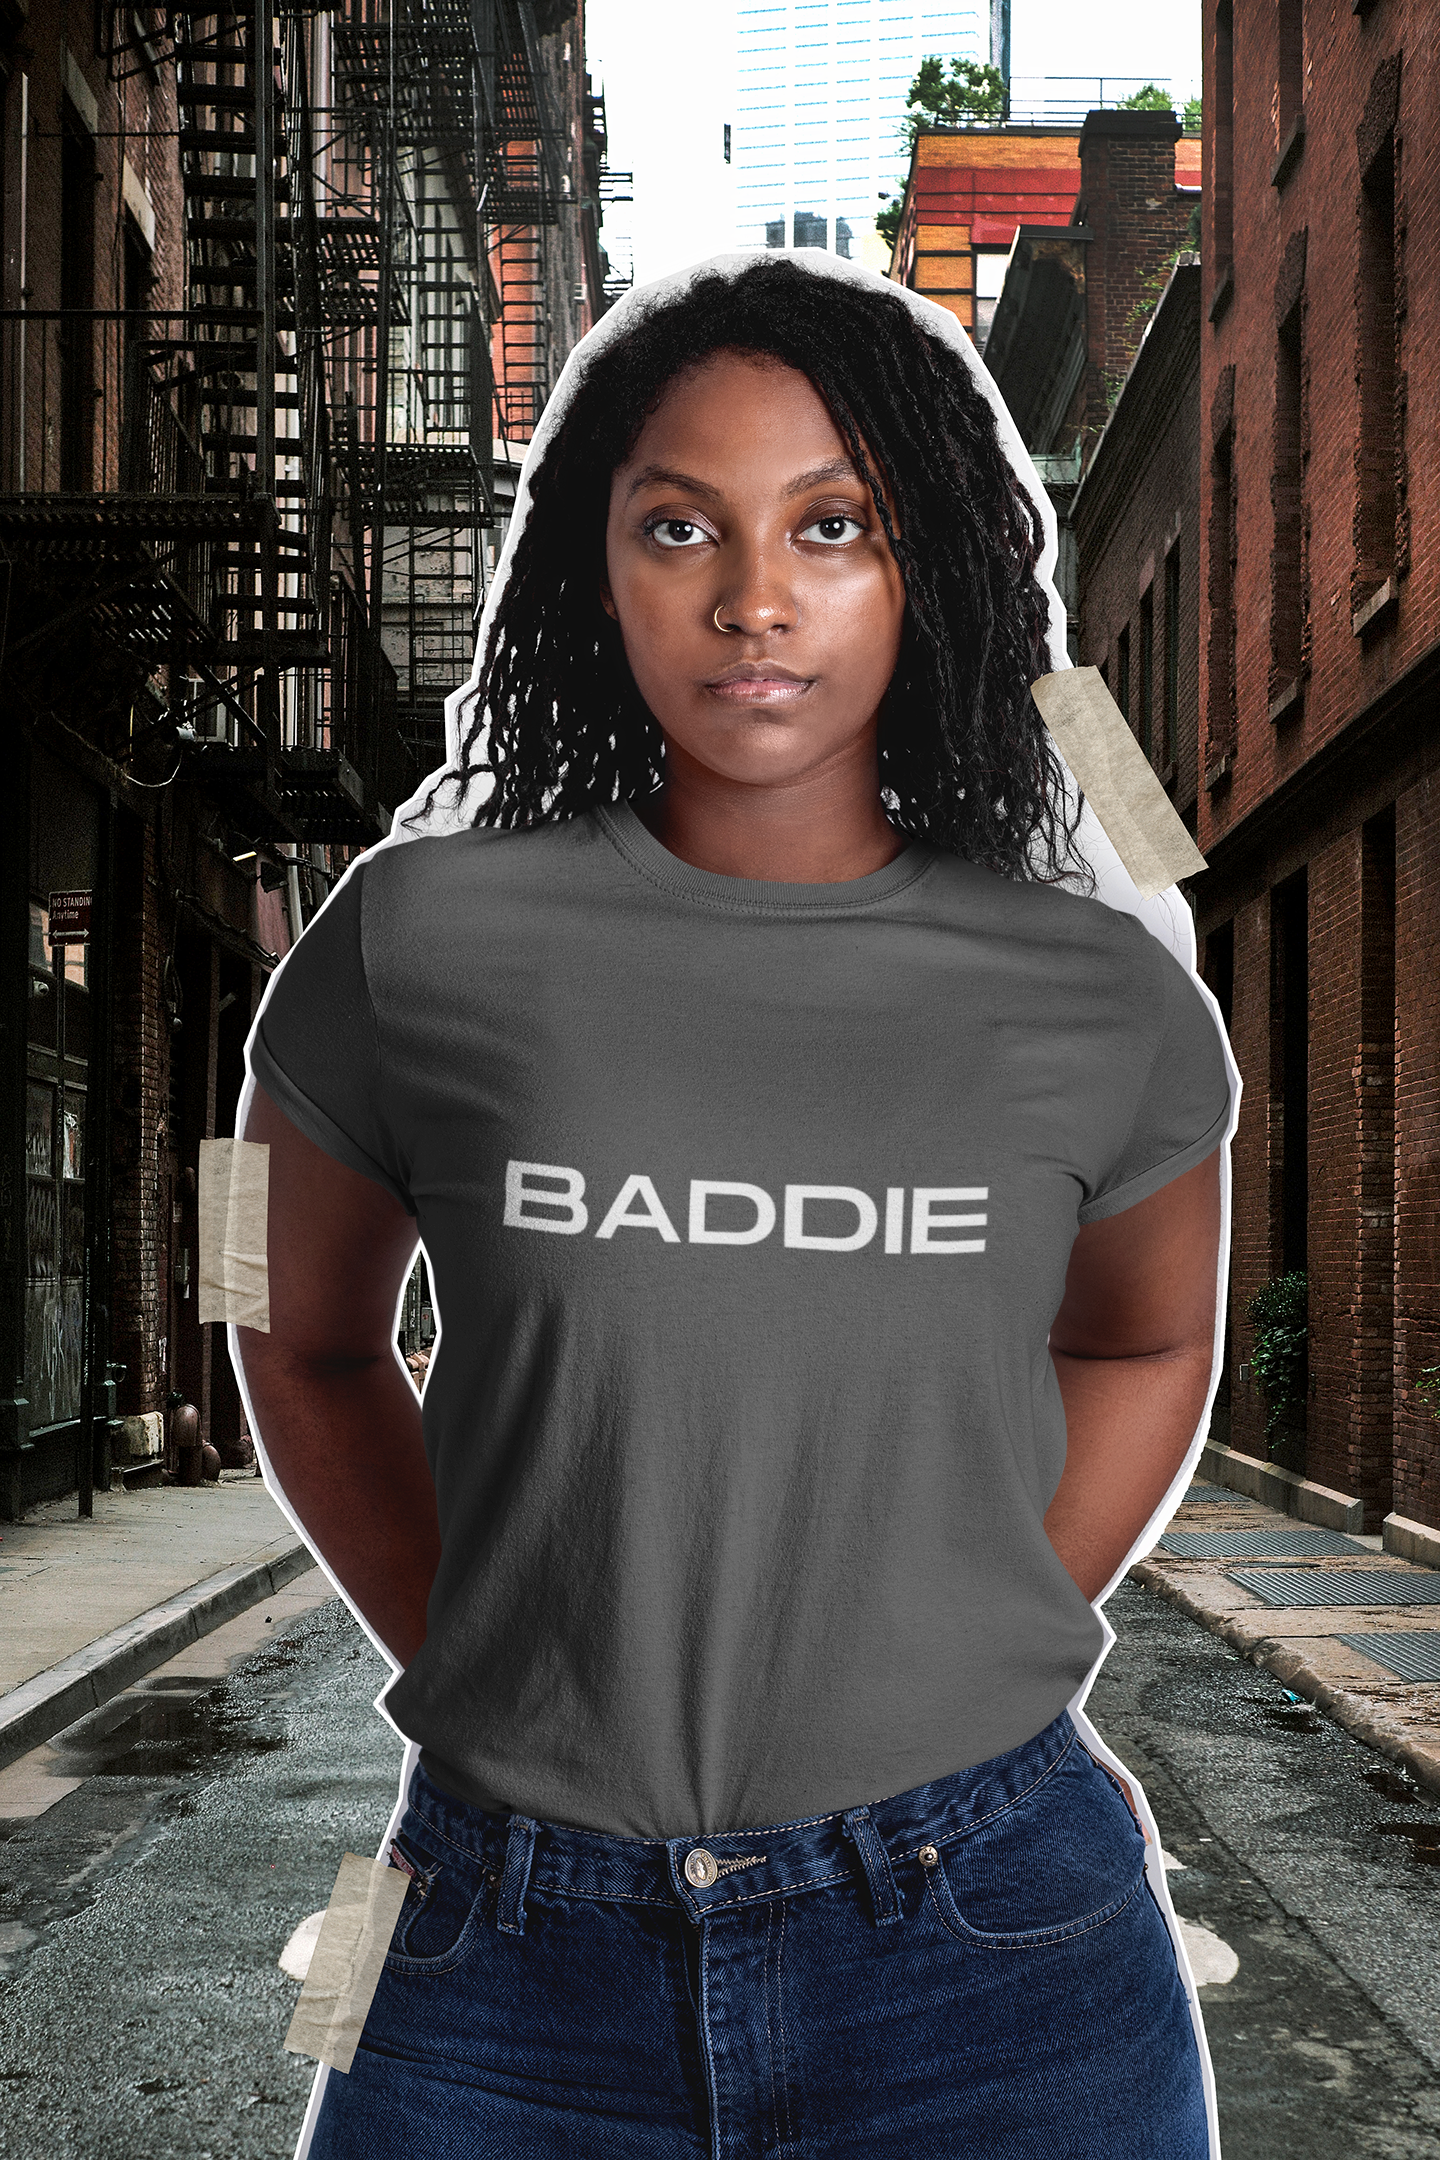 Baddie Graphic T-Shirt Women Inspirational Statement Apparel